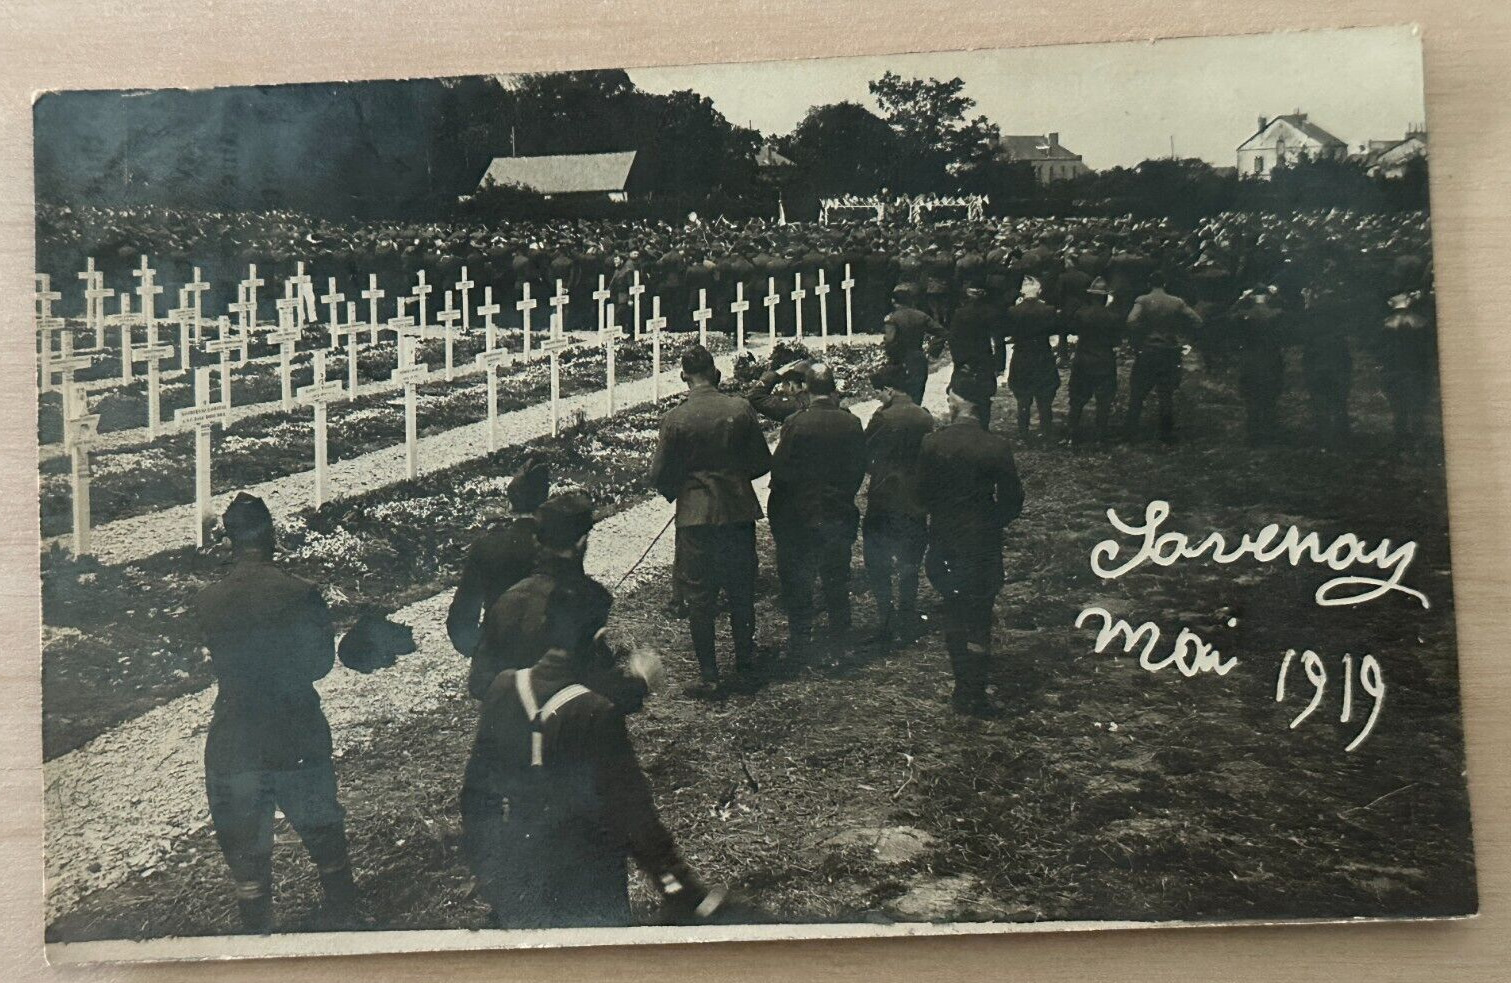 Vintage WWI Postcard - World War 1 - Lavernoy, France 1919 Military Cemetary